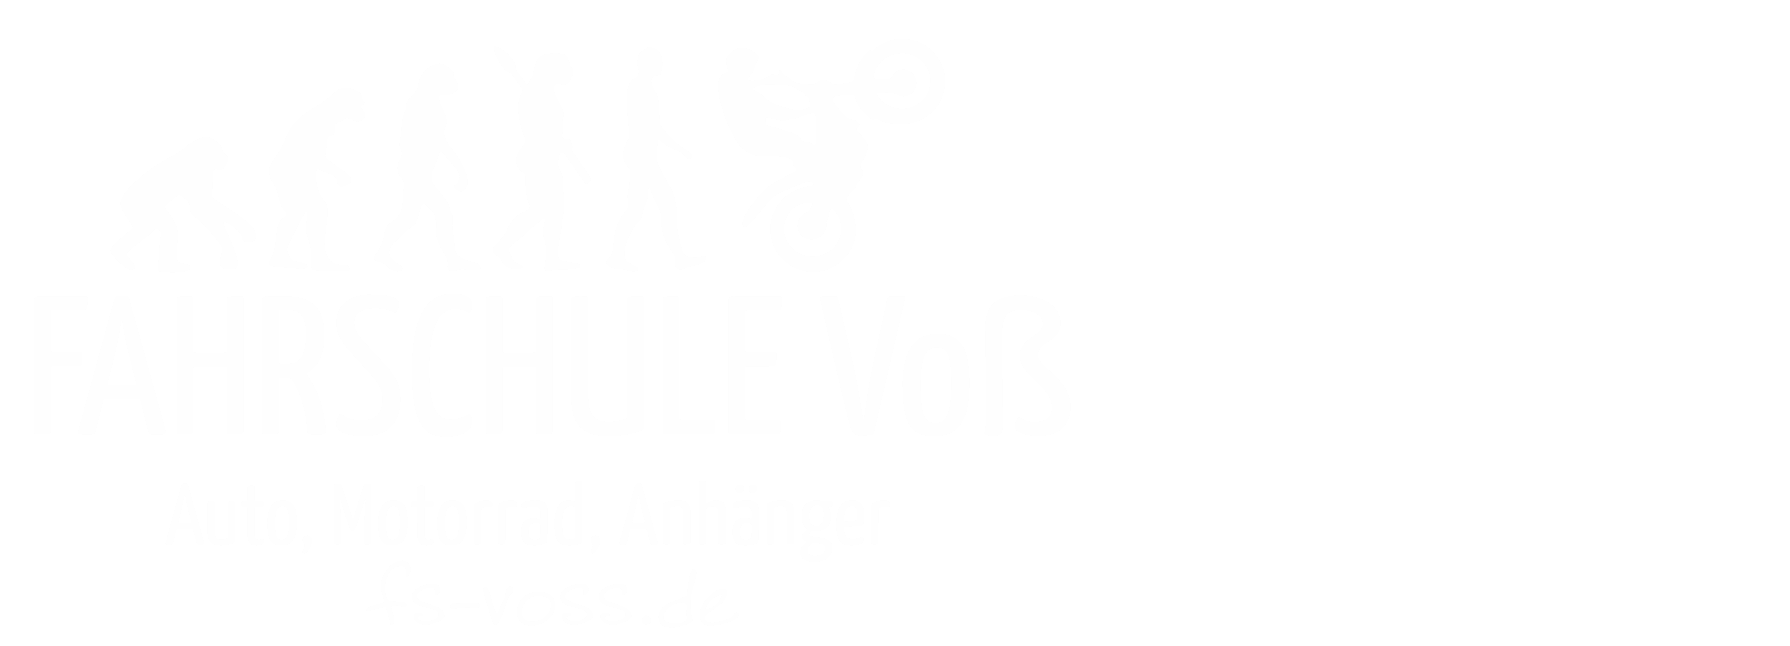 Fahrschule Voß Logo hell